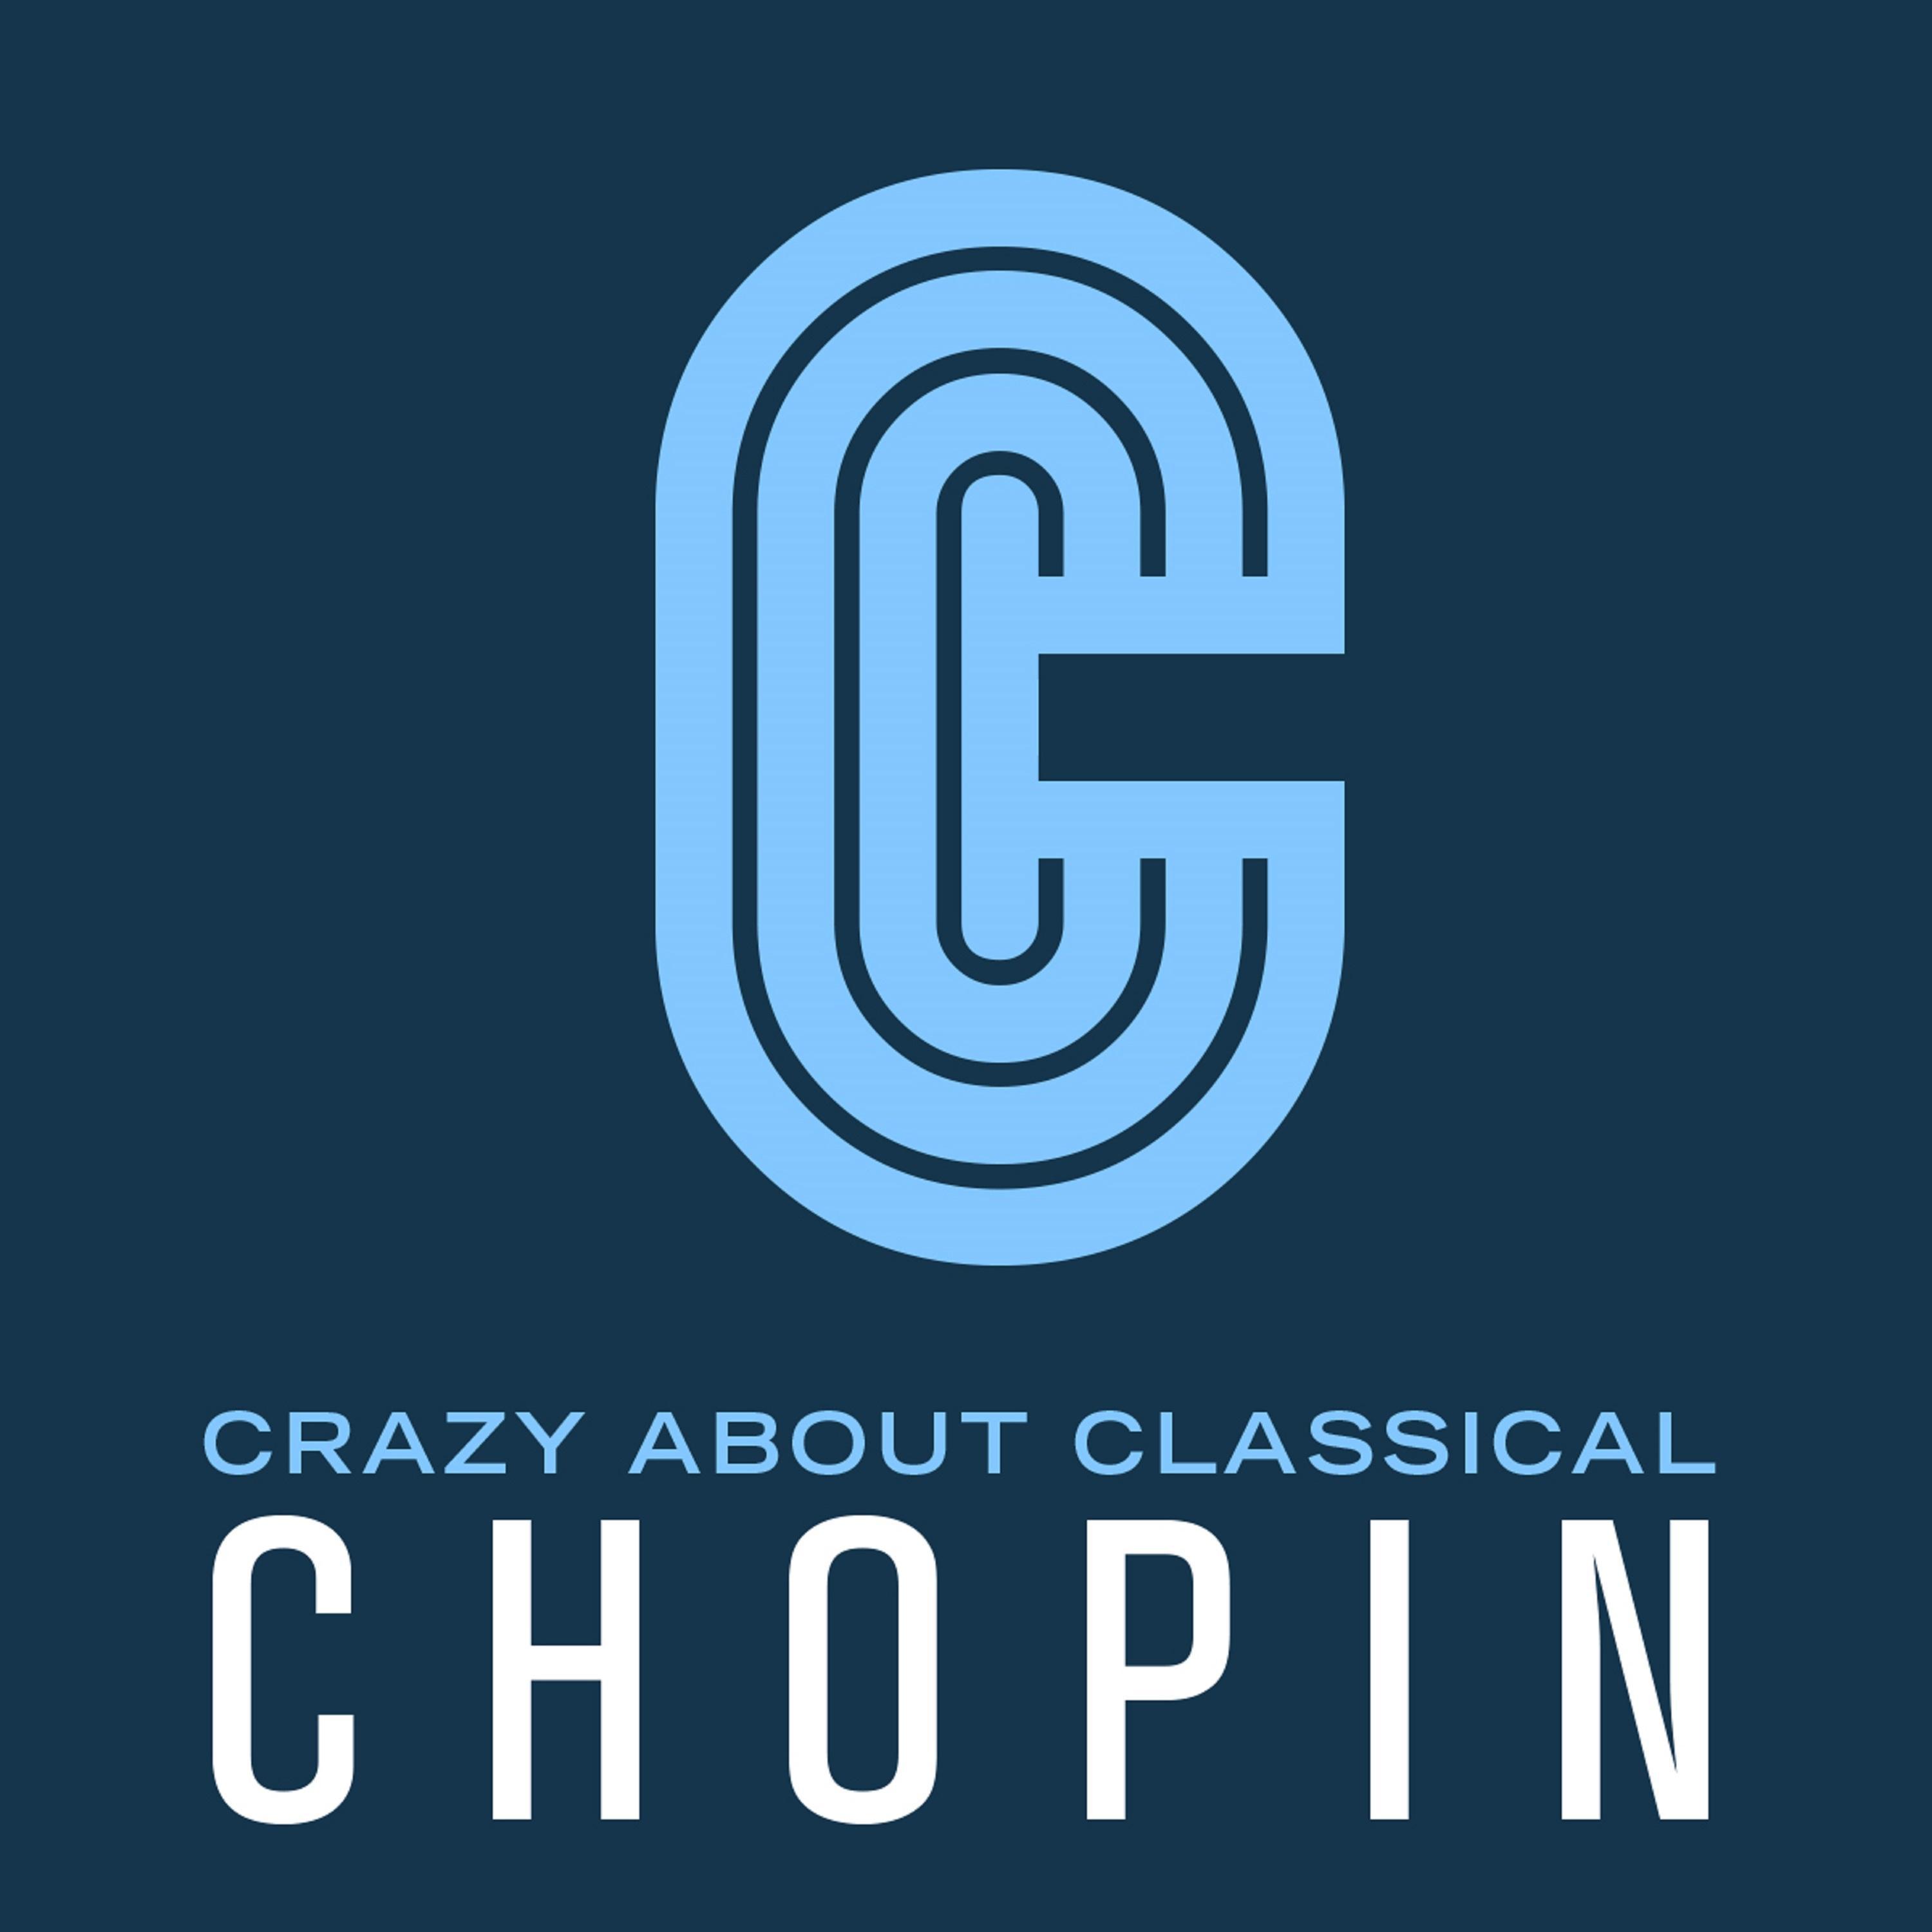 Chopin: 12 Etudes Op. 10, No. 5: Vivace in G-flat Major (Black Key Study)